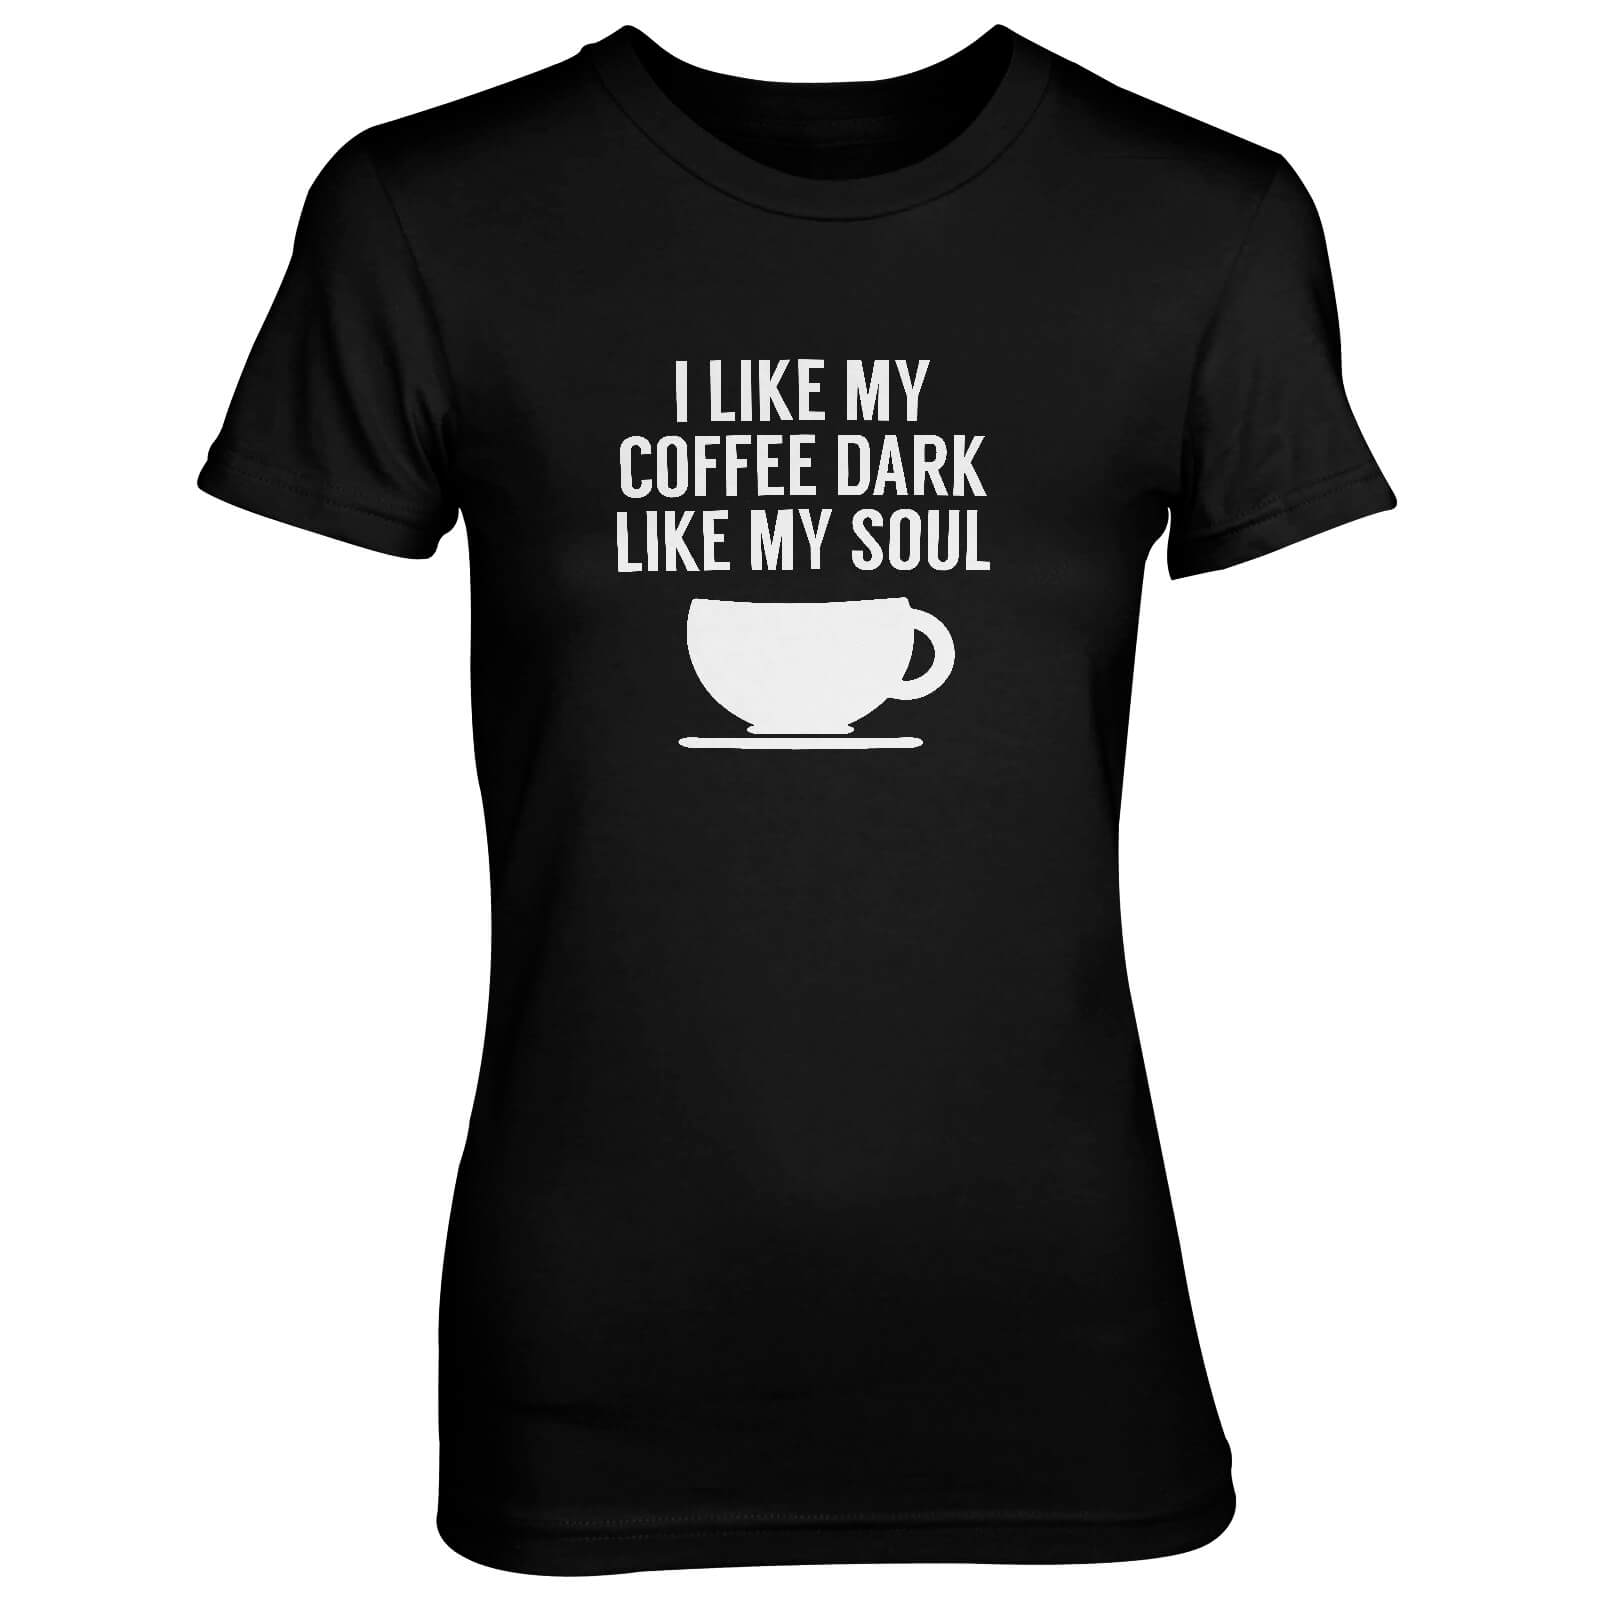 I Like My Coffee Dark Like My Soul Women's Black T-Shirt - S - Black